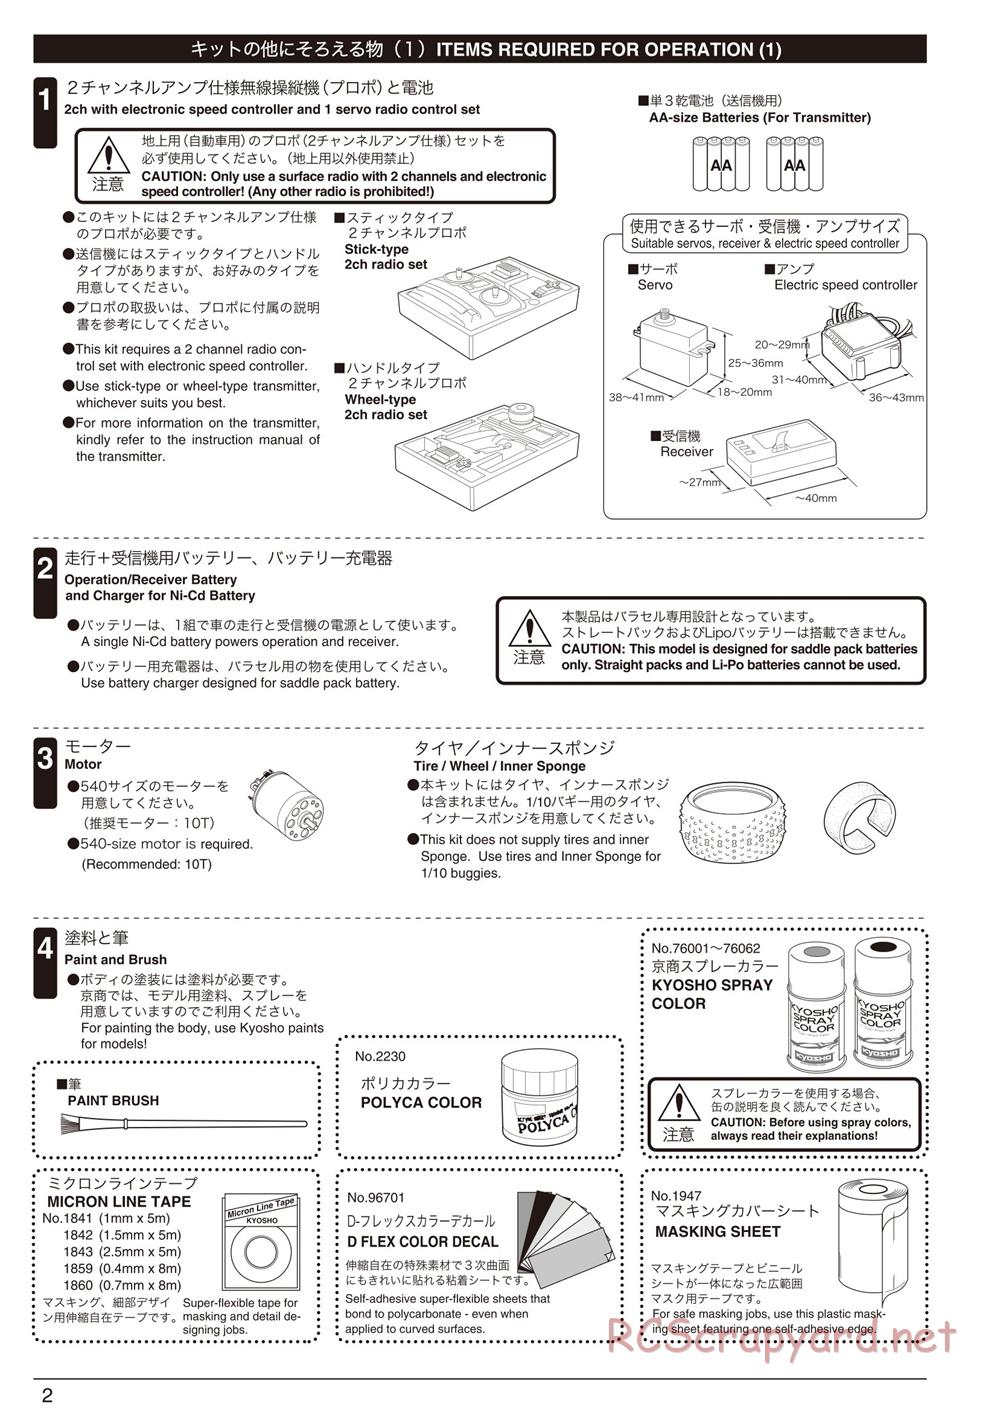 Kyosho - Lazer ZX-5 FS - Manual - Page 2